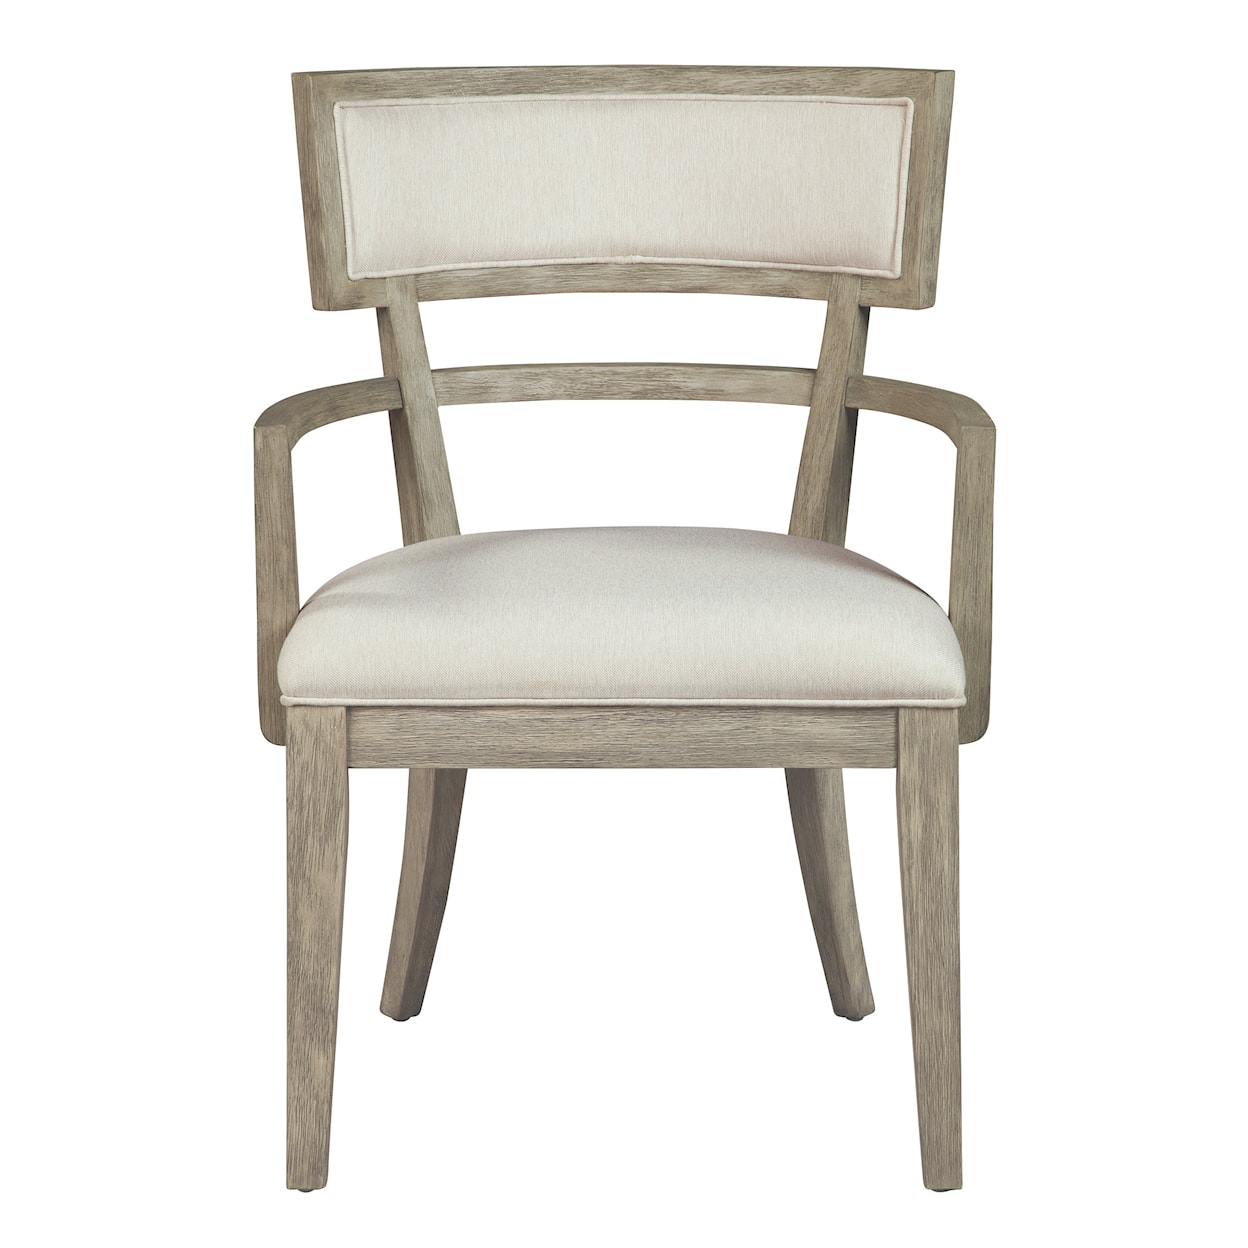 Hekman Bedford Park Dining Arm Chair